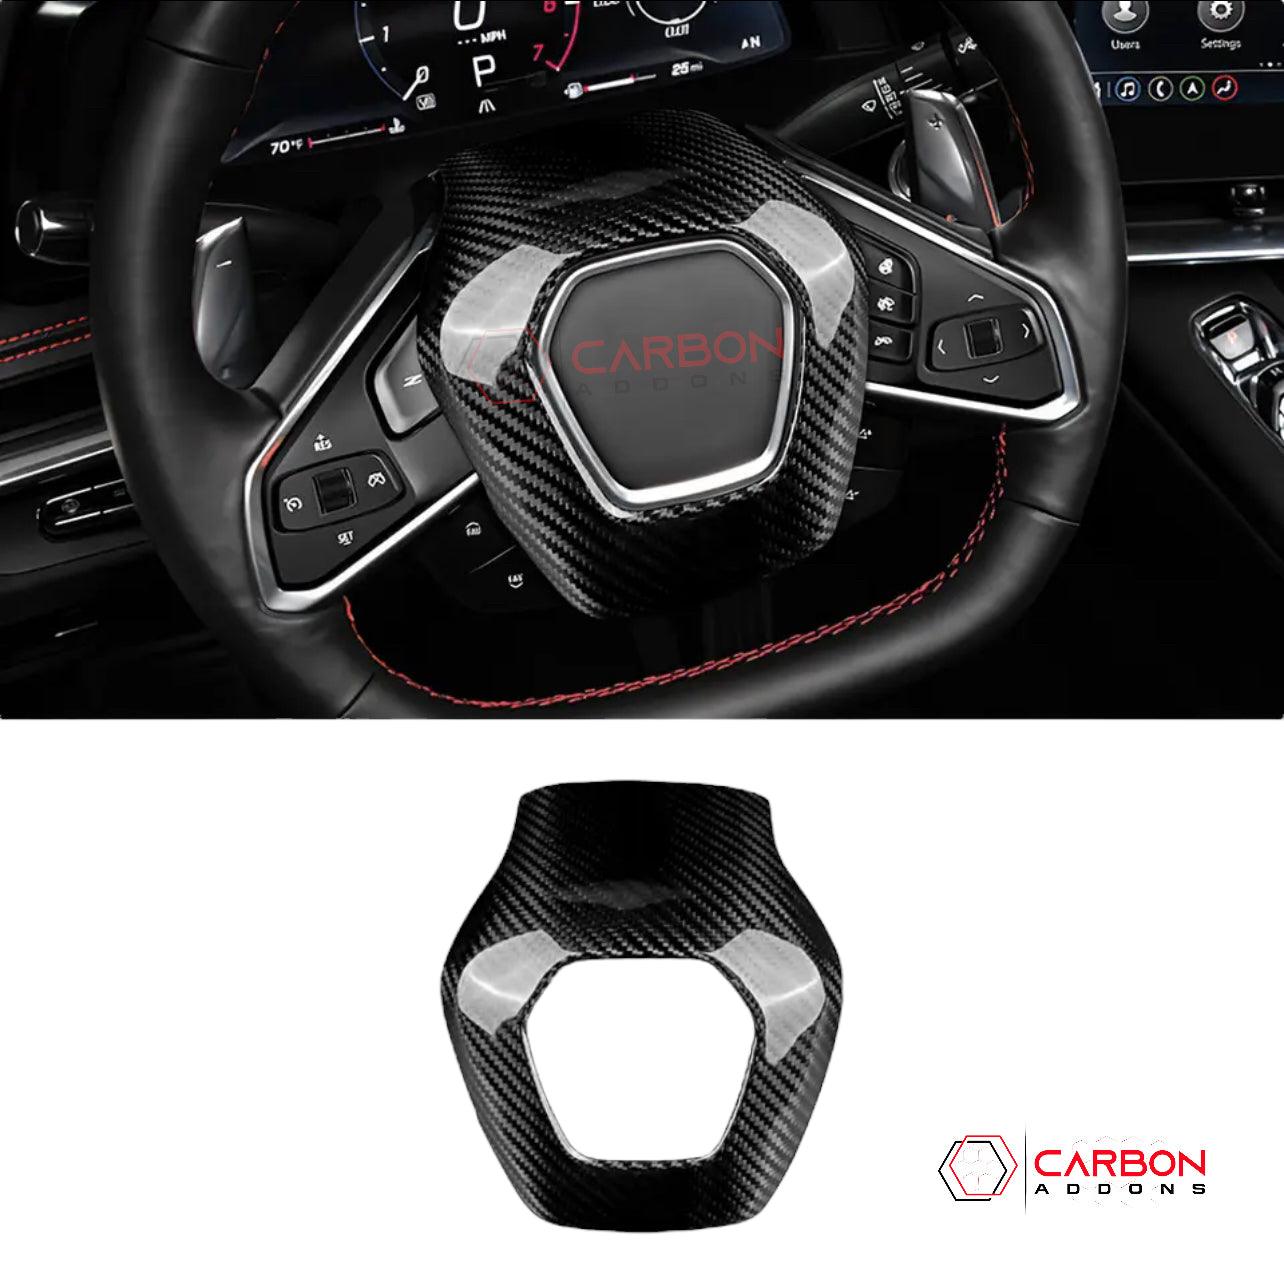 C8 2020+ Corvette Steering Wheel Carbon Fiber Airbag Cover - carbonaddons Carbon Fiber Parts, Accessories, Upgrades, Mods